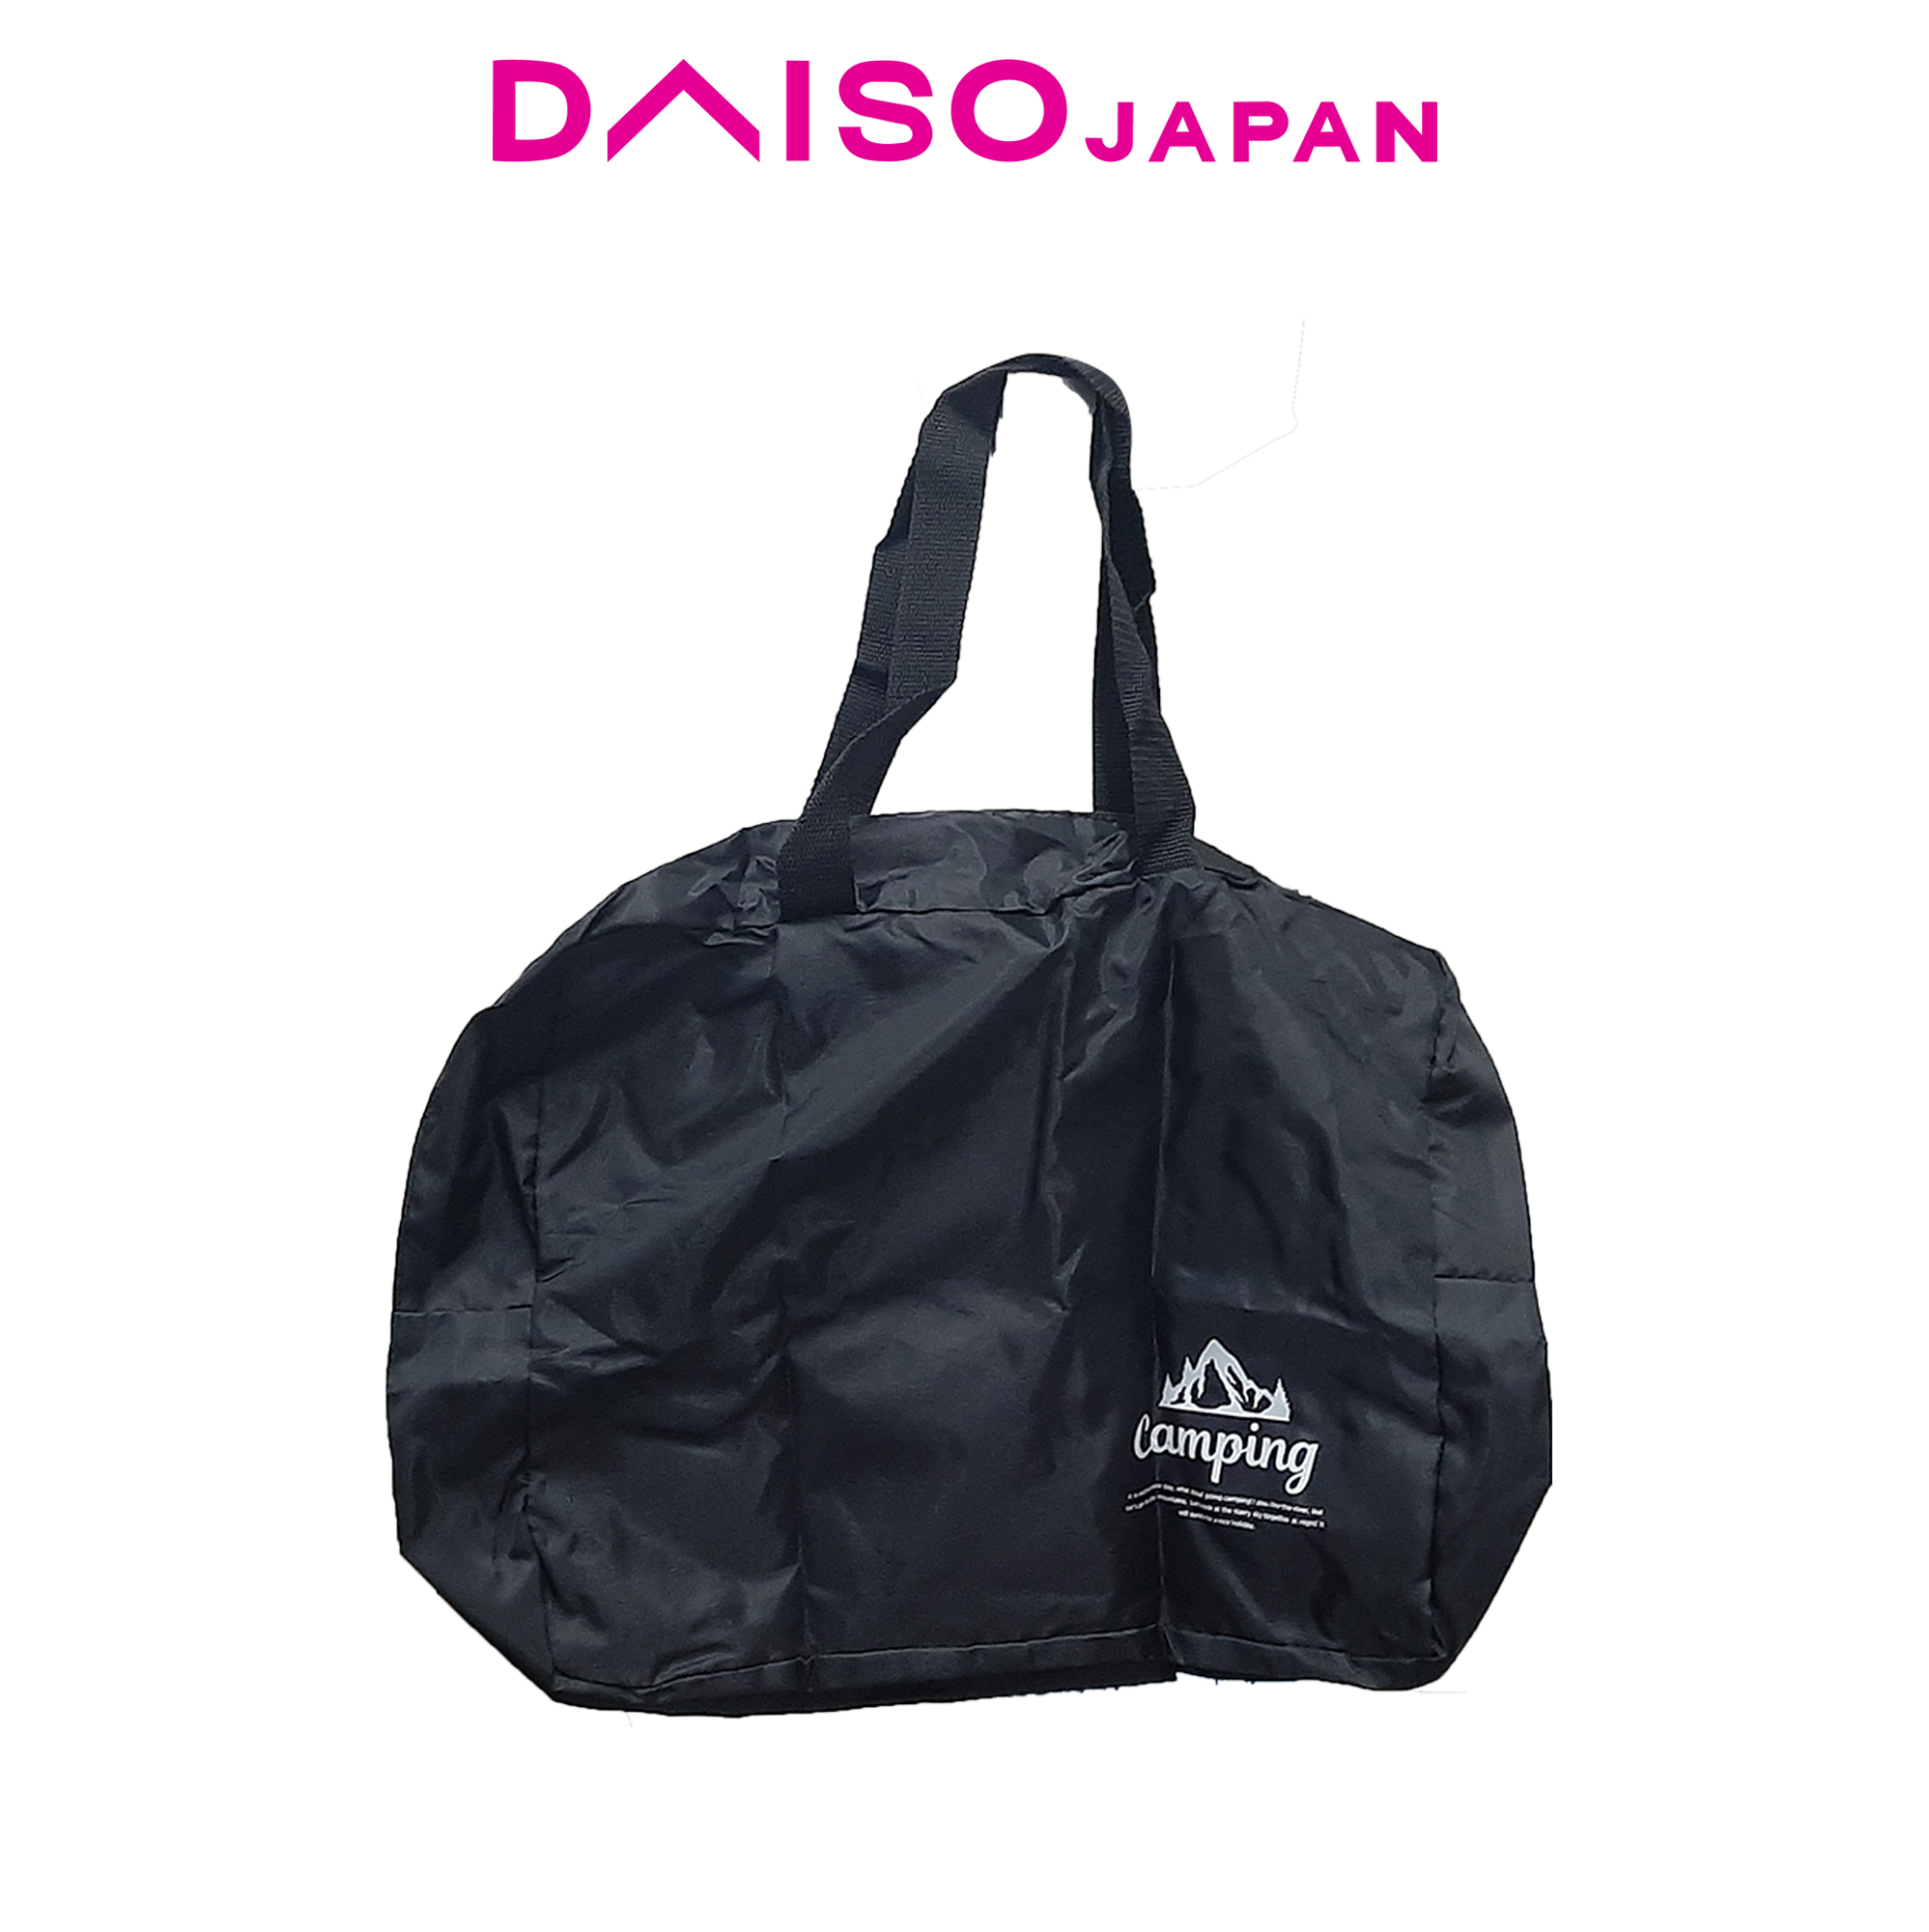 Daiso Japan (大創産業) Logo